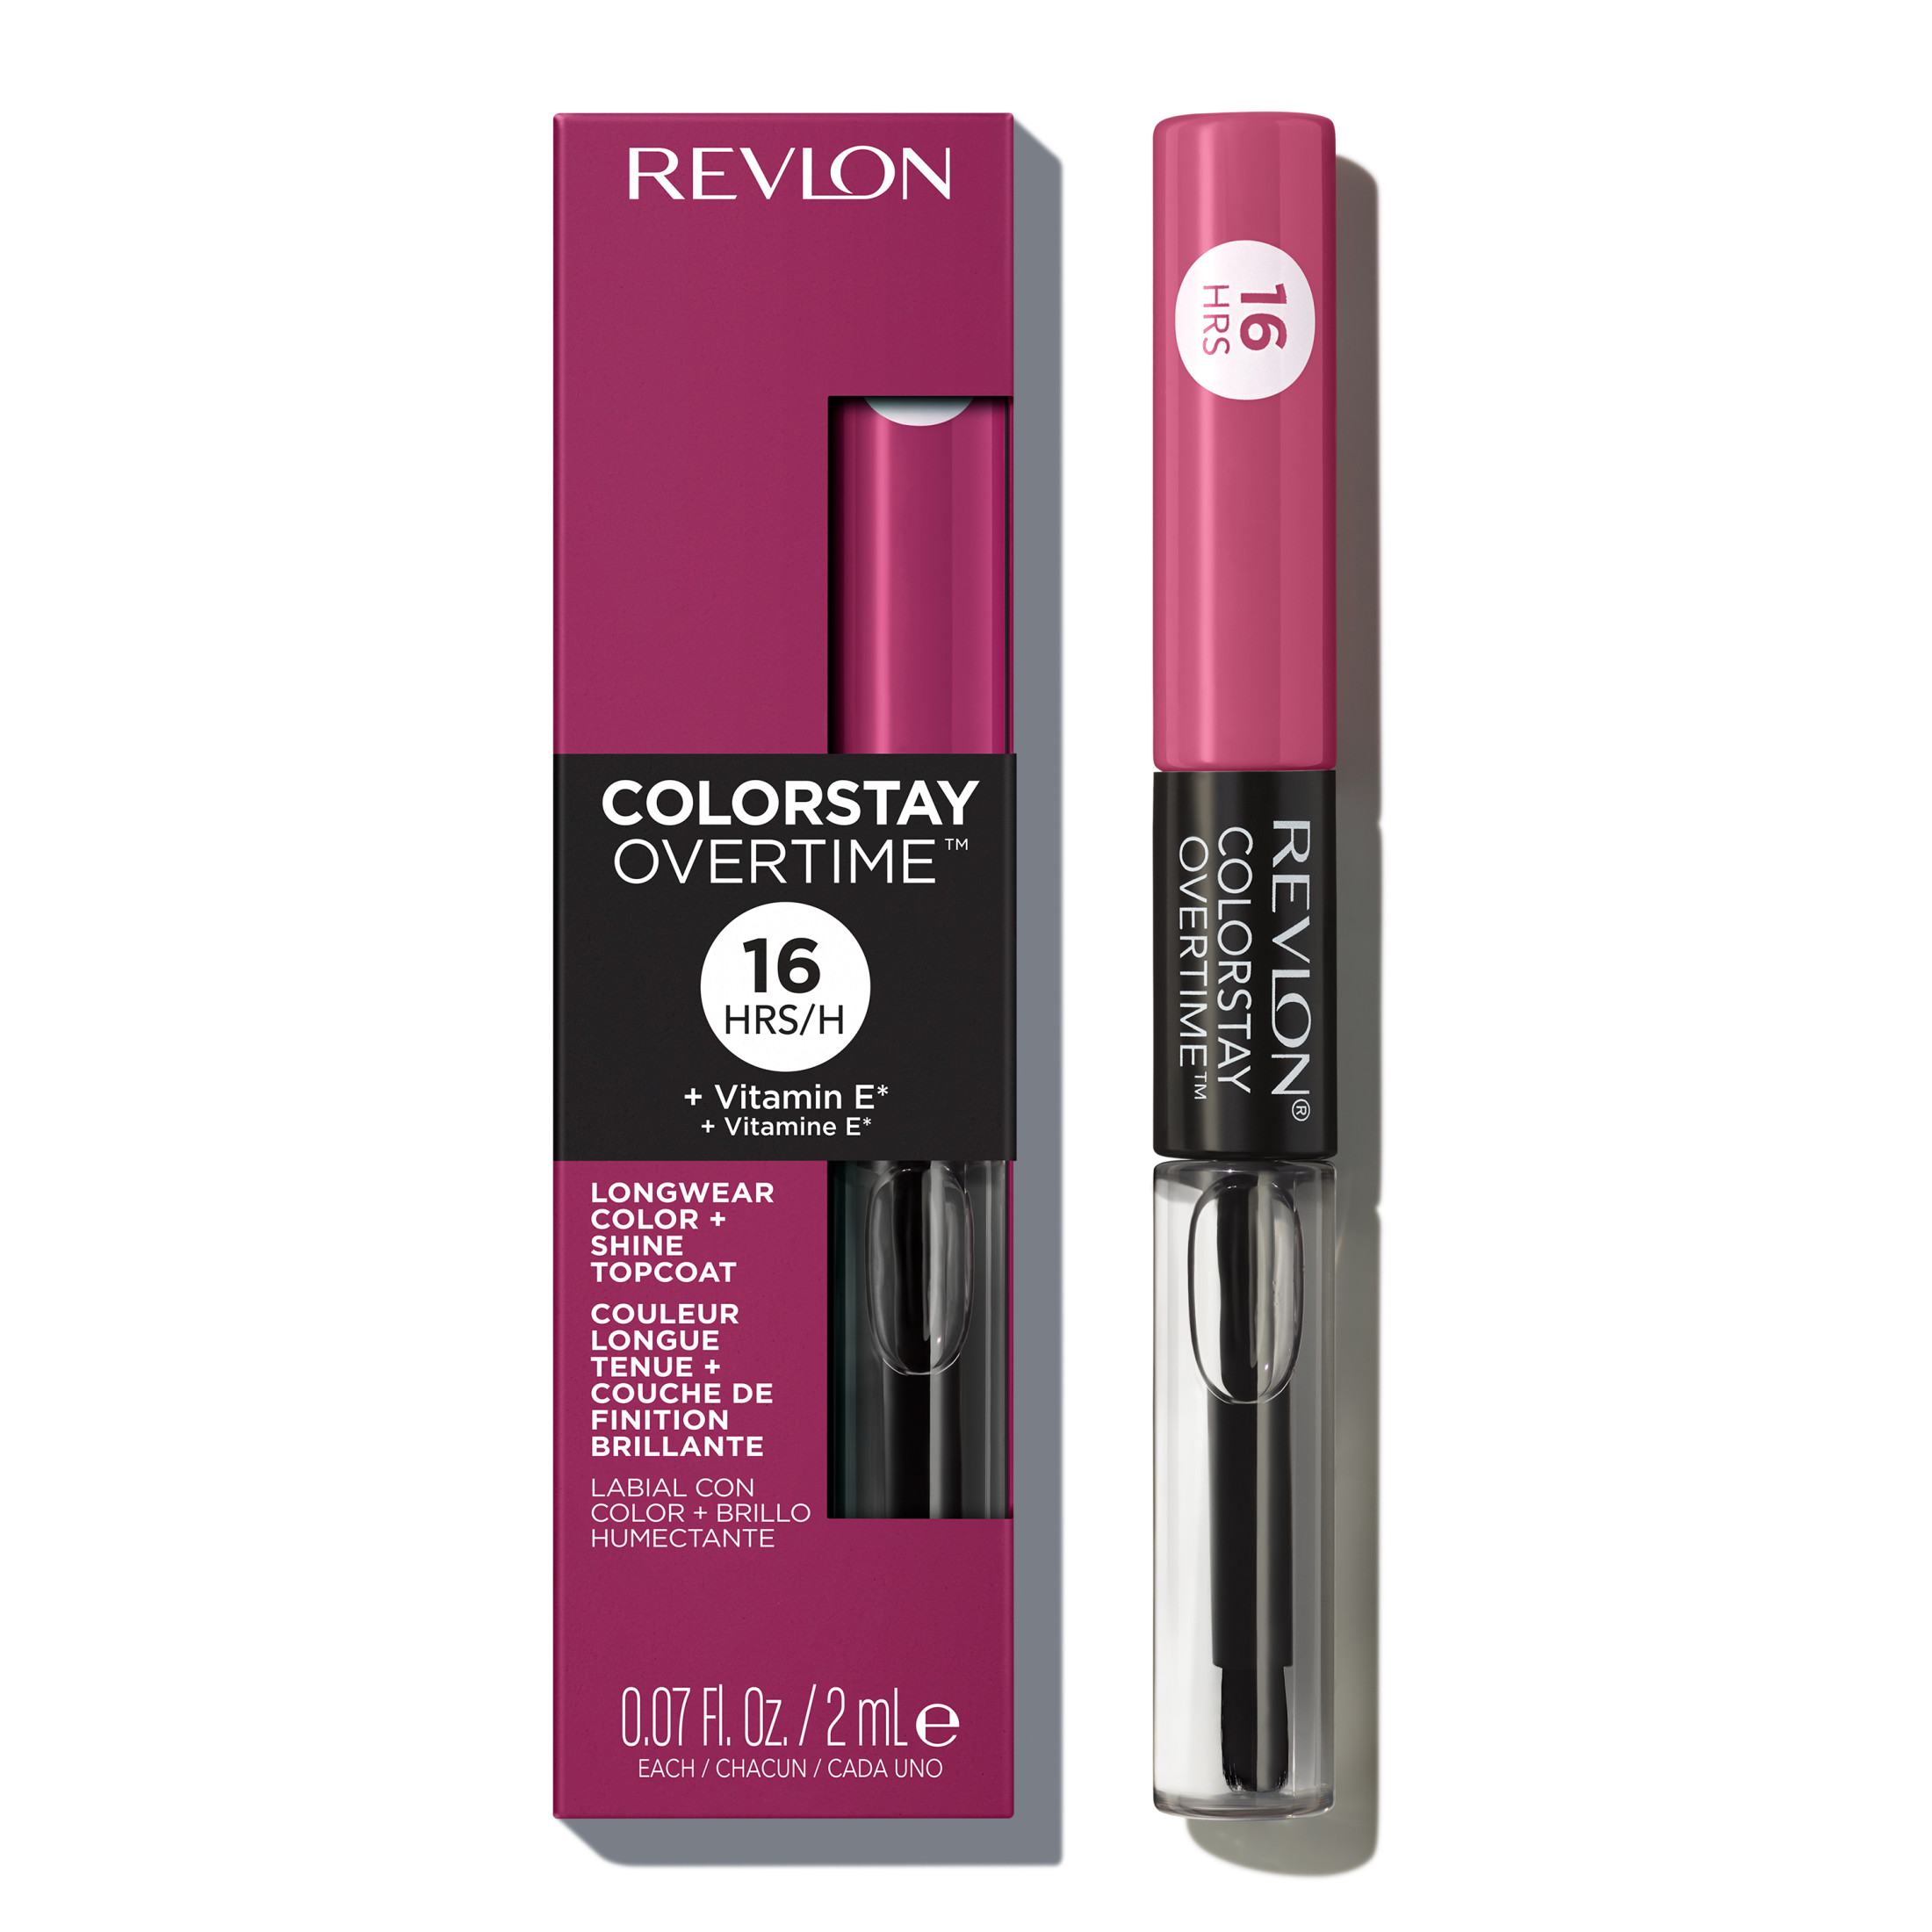 Revlon ColorStay Overtime Longwearing Gloss Lipstick with Vitamin E, 260 Perennial Plum, 0.07 fl oz - image 1 of 8